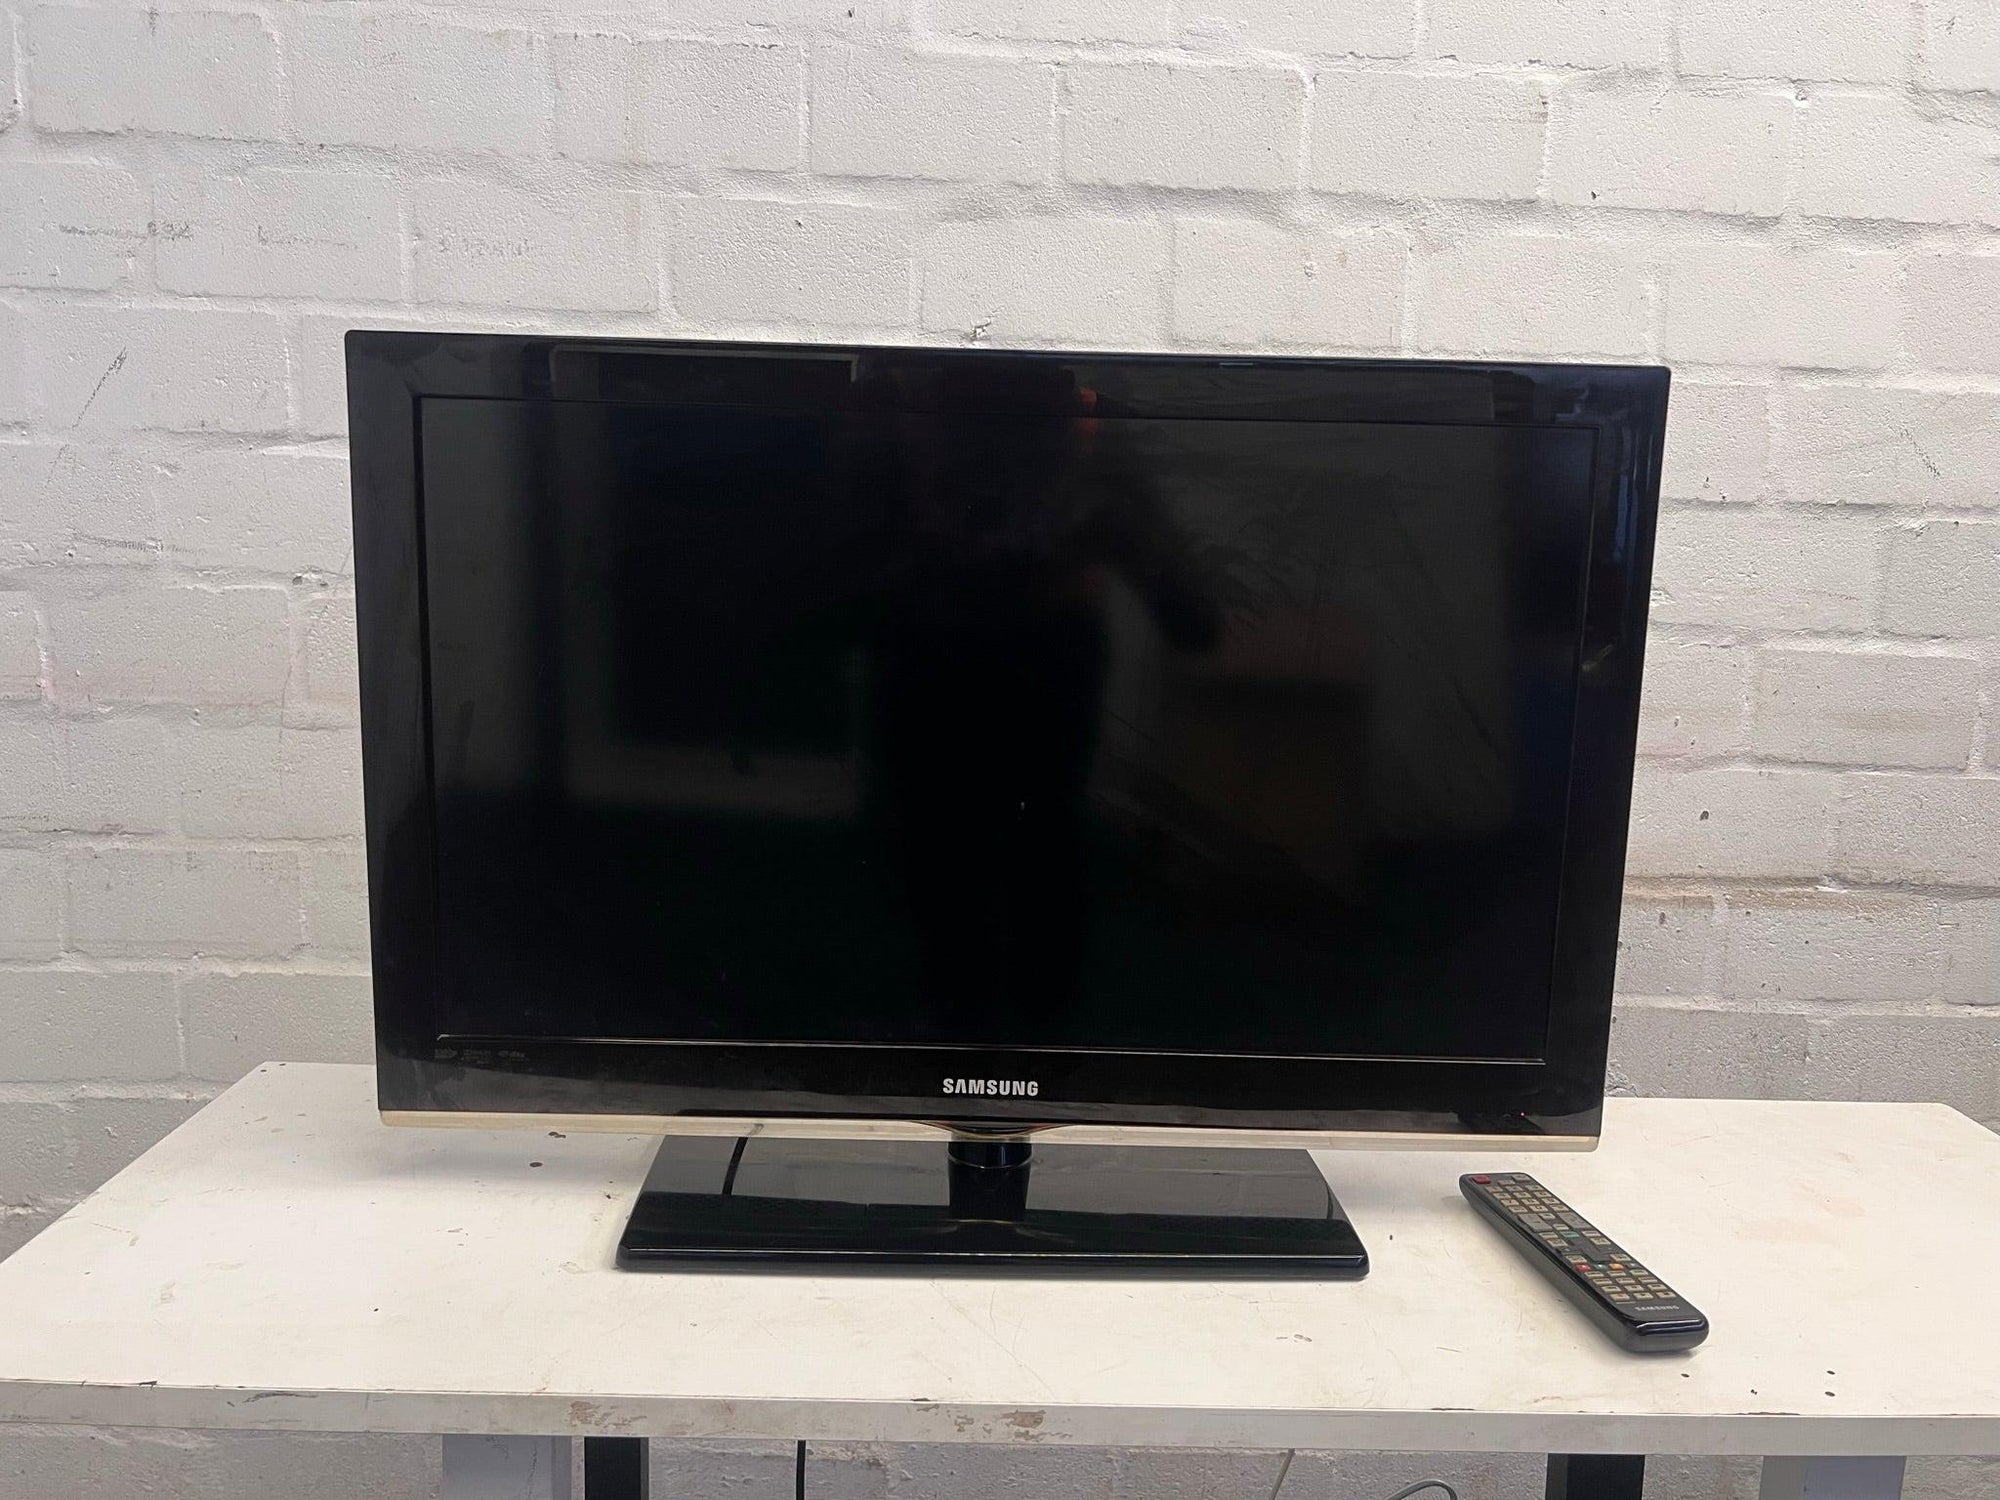 Samsung 32” LCD TV